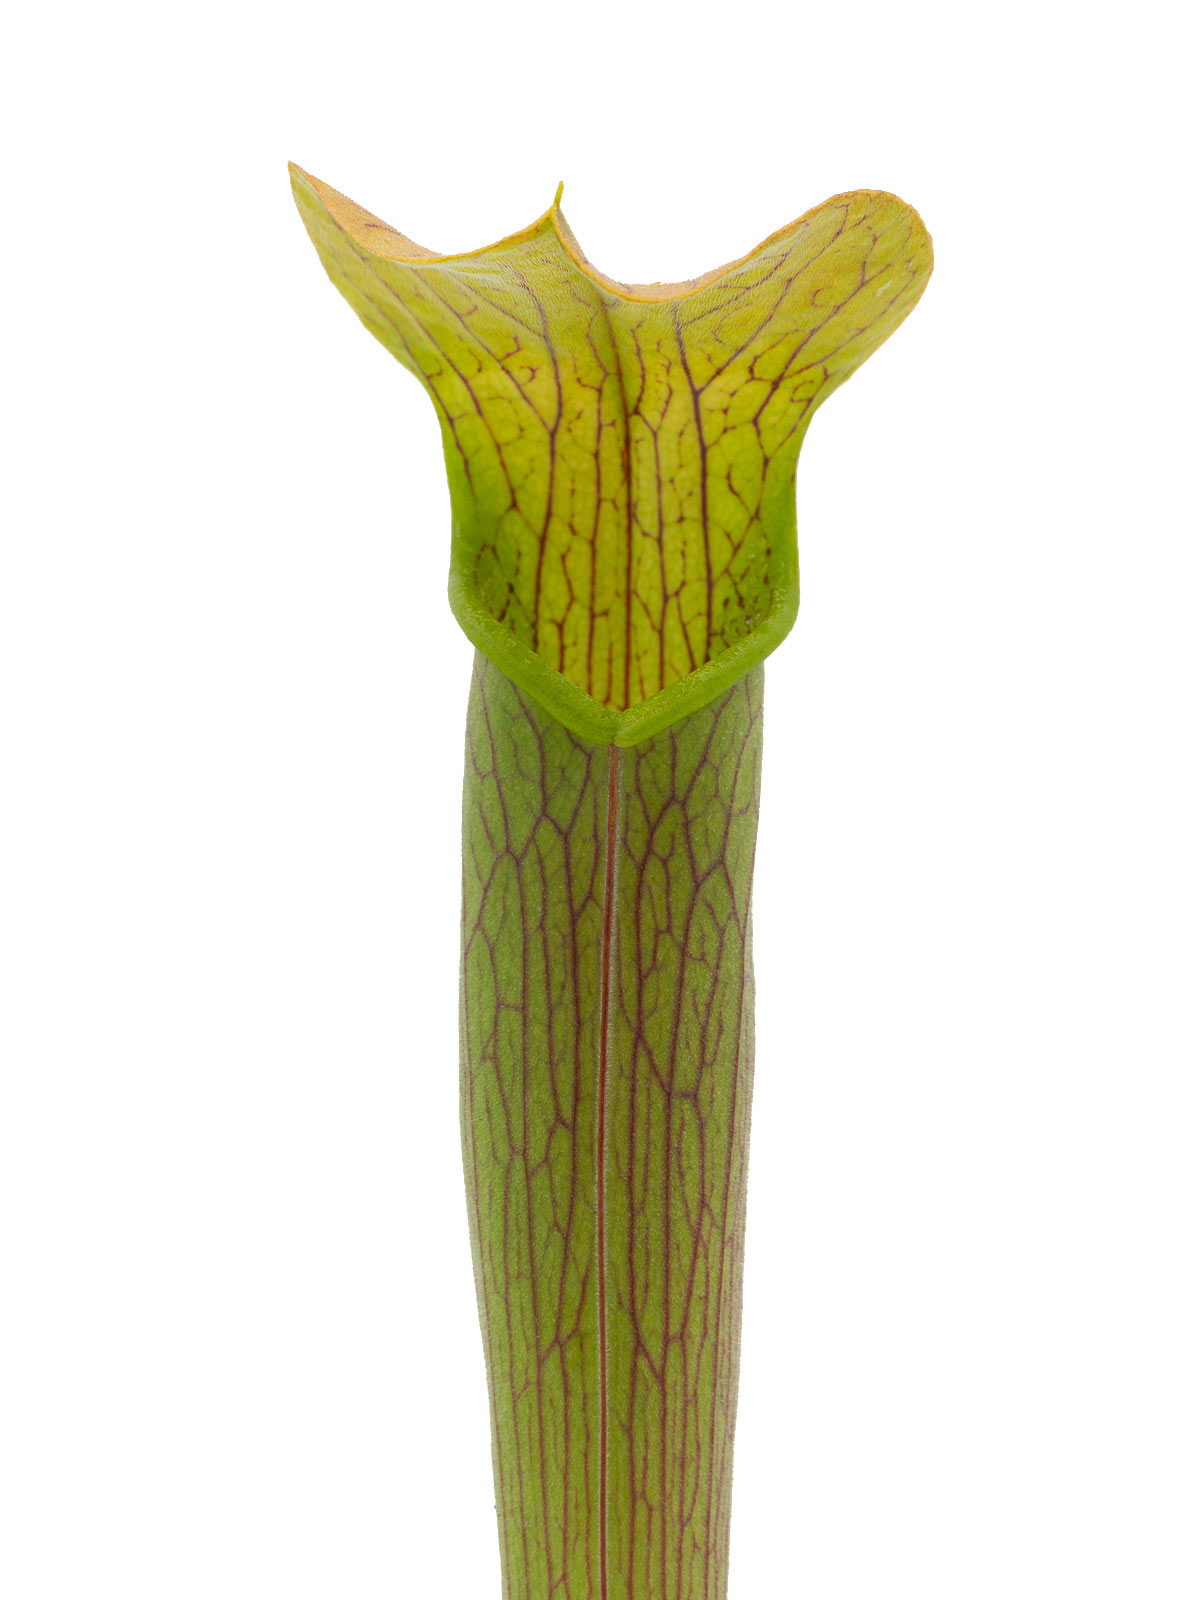 Sarracenia rubra ssp. wherryi - MK RW06, Giant form, Chatom, Washington County, Alabama